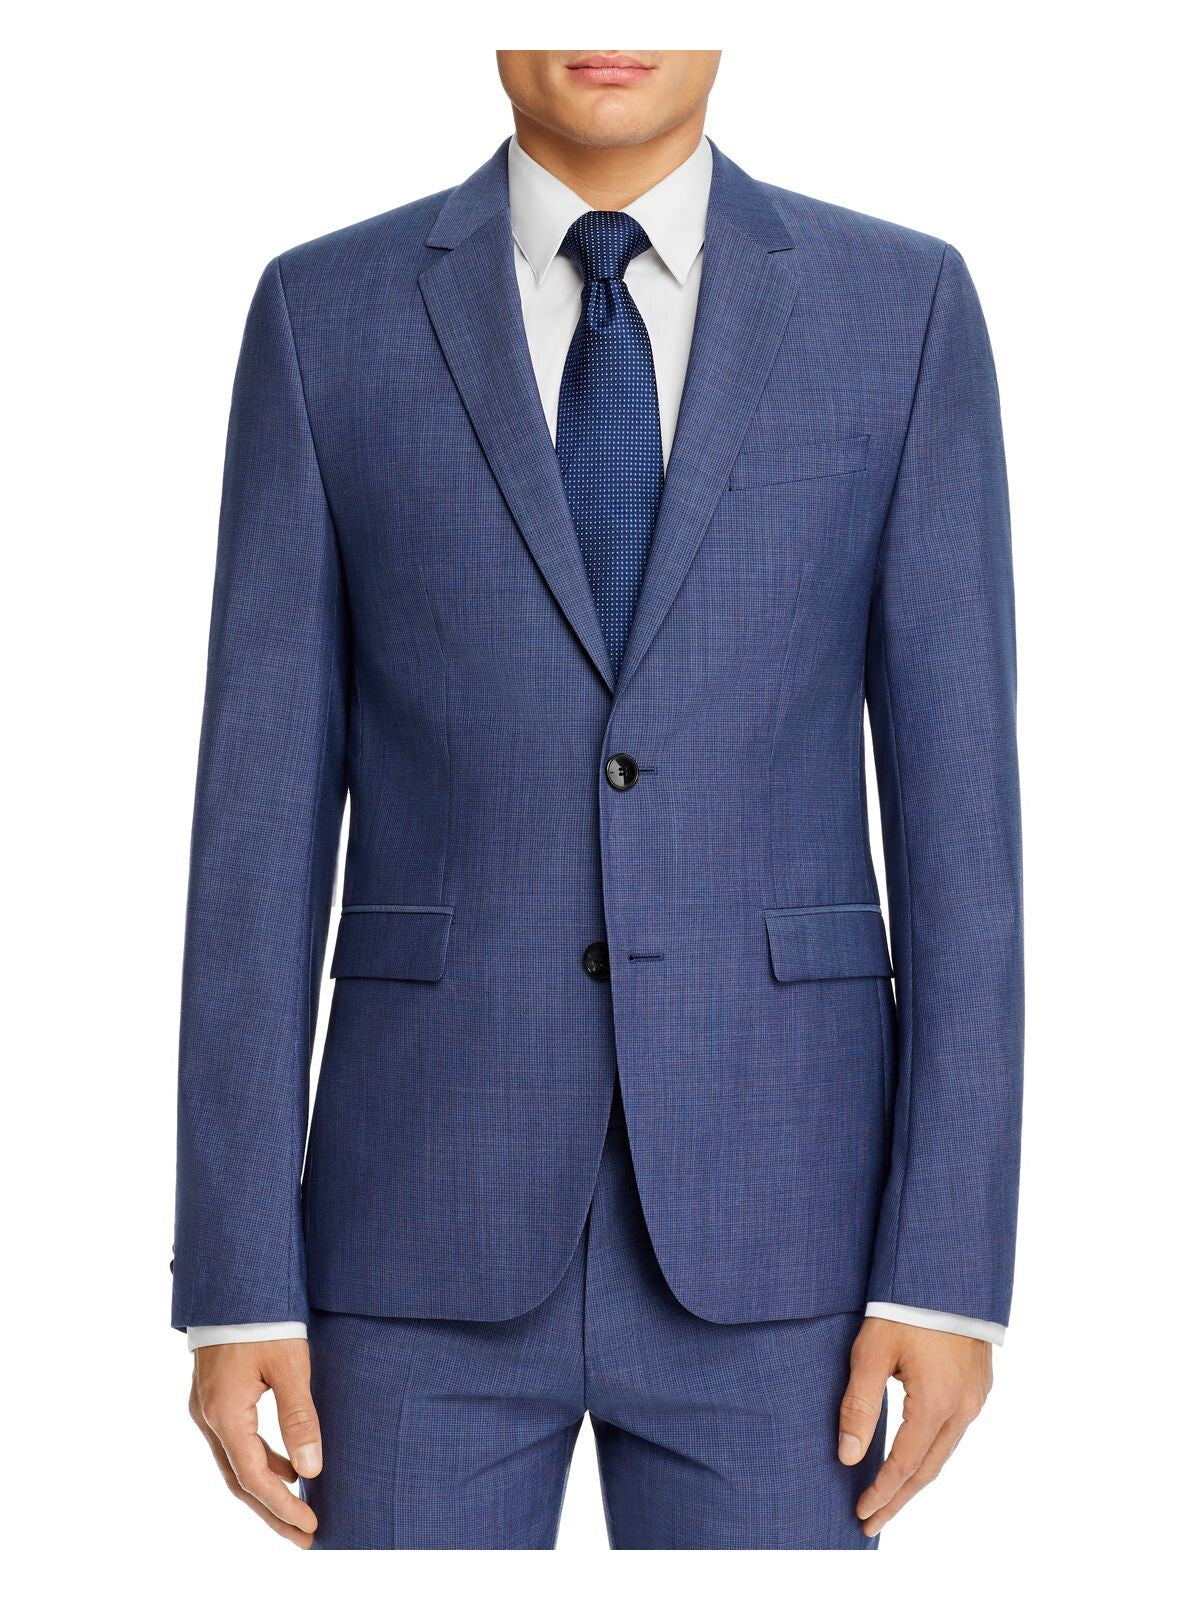 HUGO BOSS Mens Blue Single Breasted, Wool Blend Suit Jacket 40S